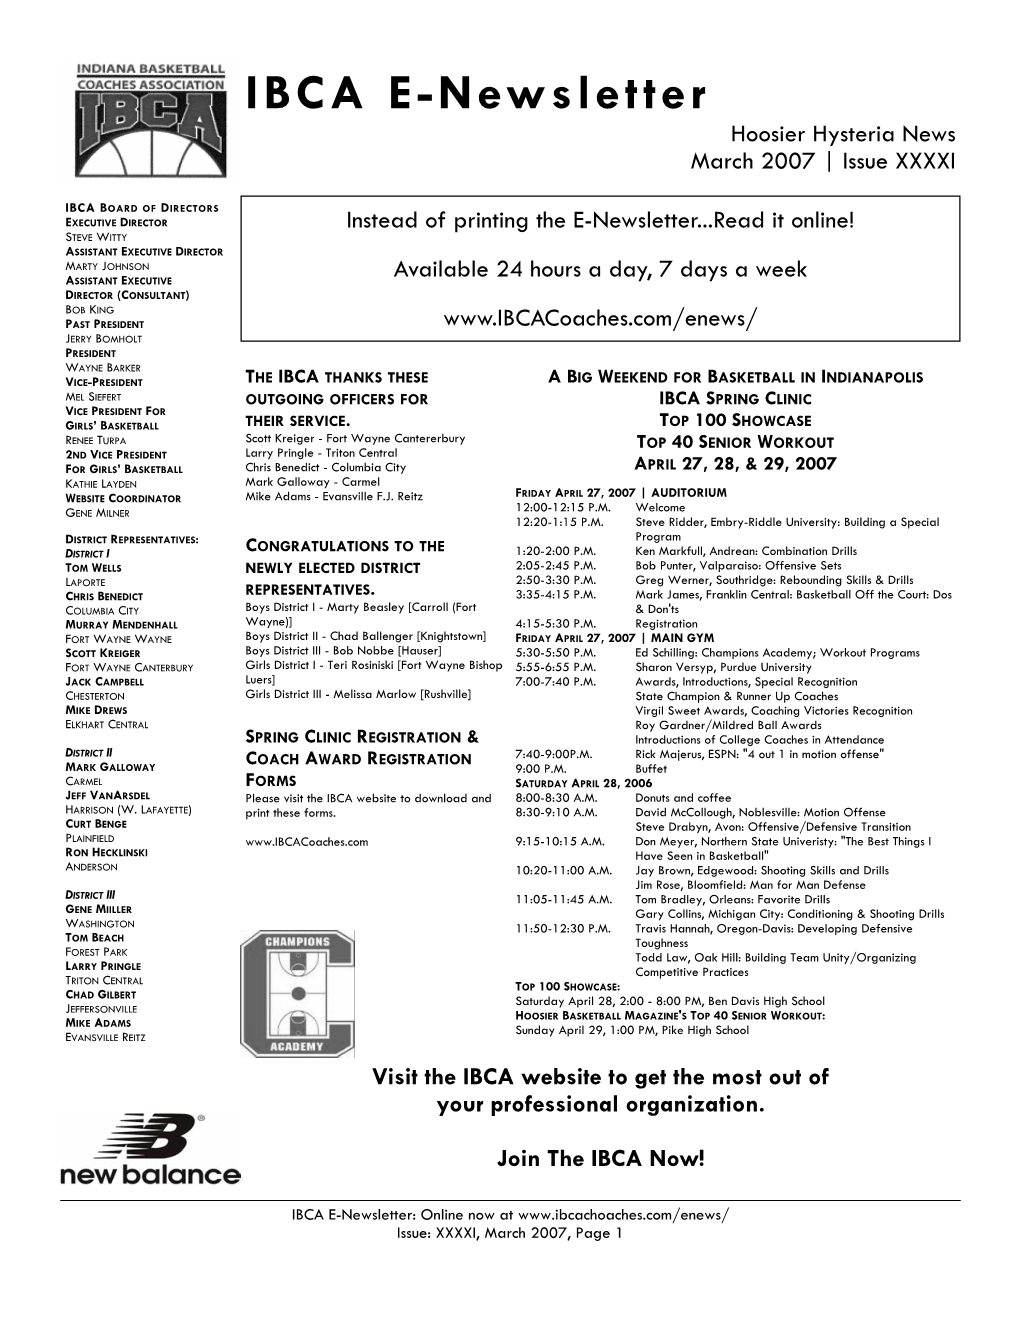 IBCA E-Newsletter Hoosier Hysteria News March 2007 | Issue XXXXI